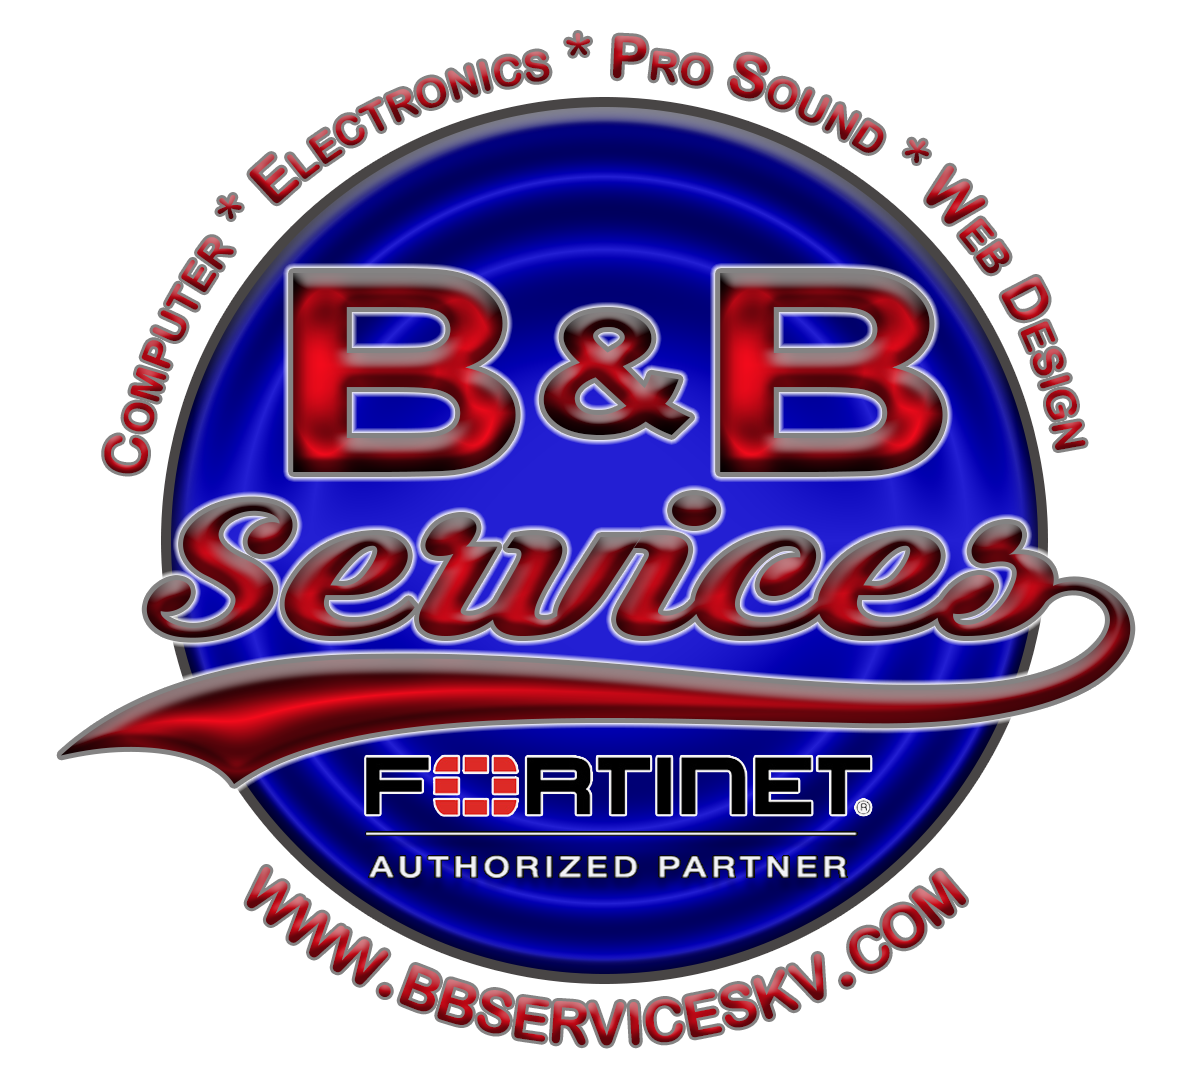 B&B Services